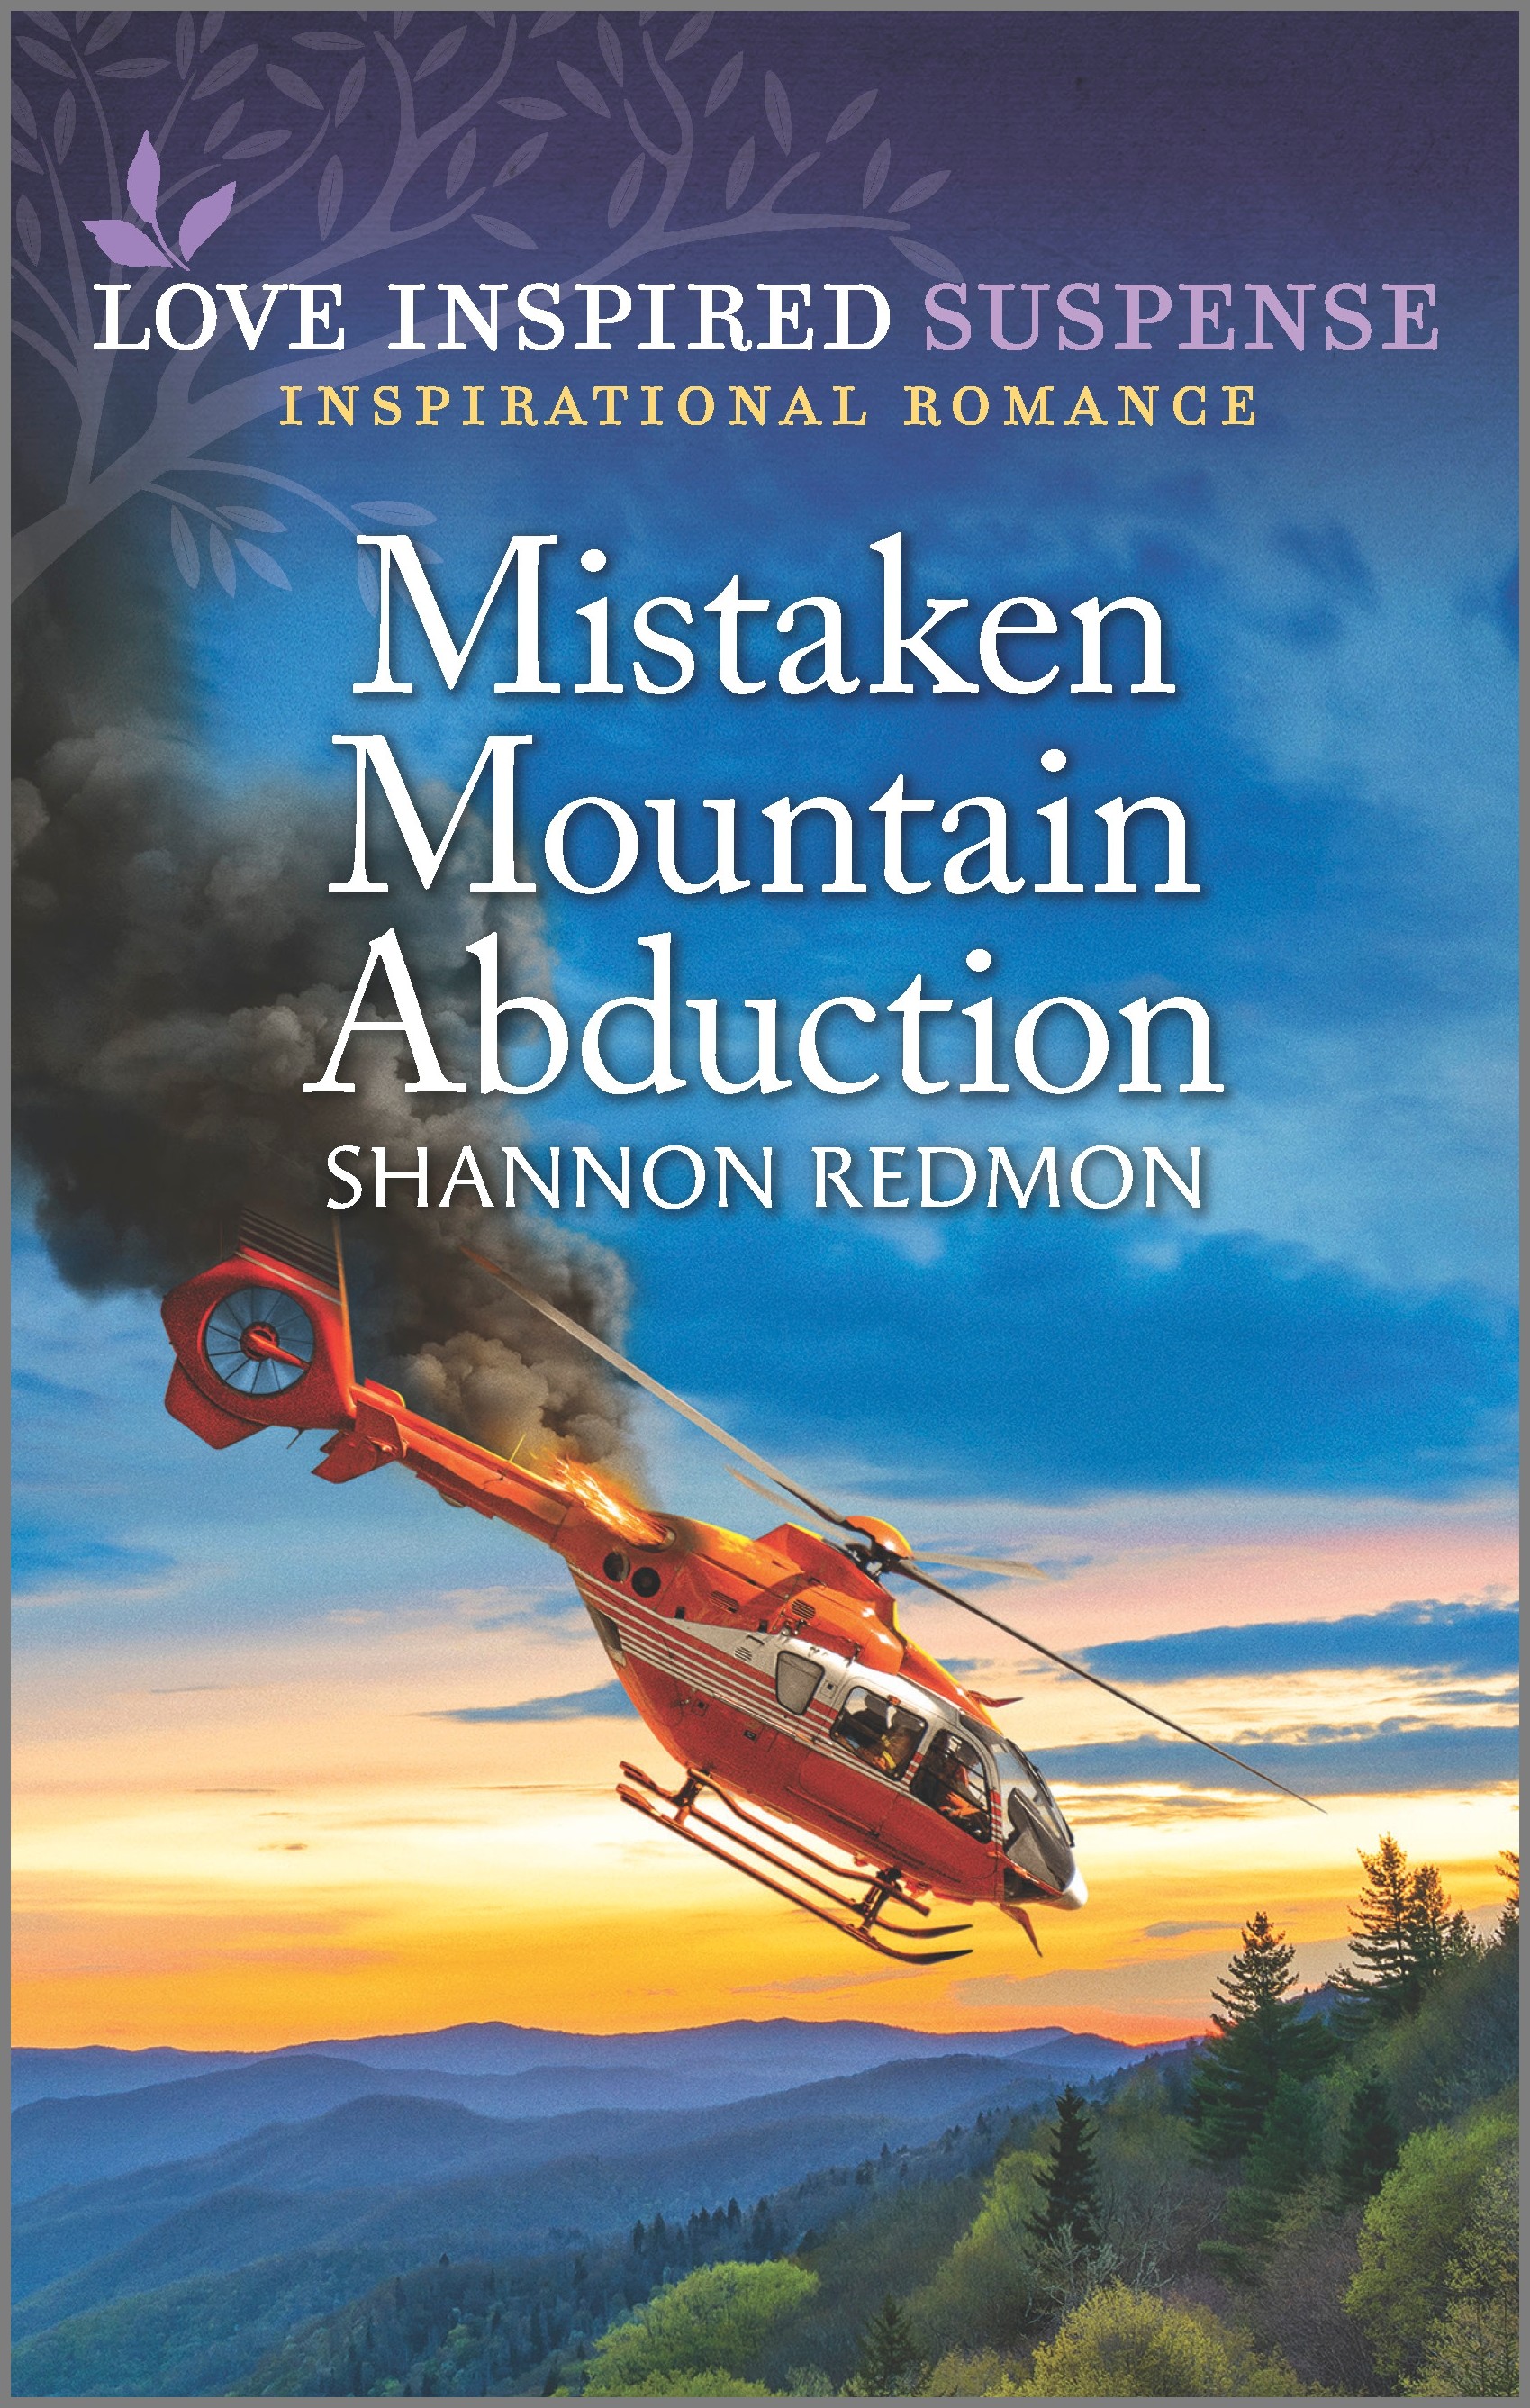 MISTAKEN MOUNTAIN ABDUCTION by Shannon Redman